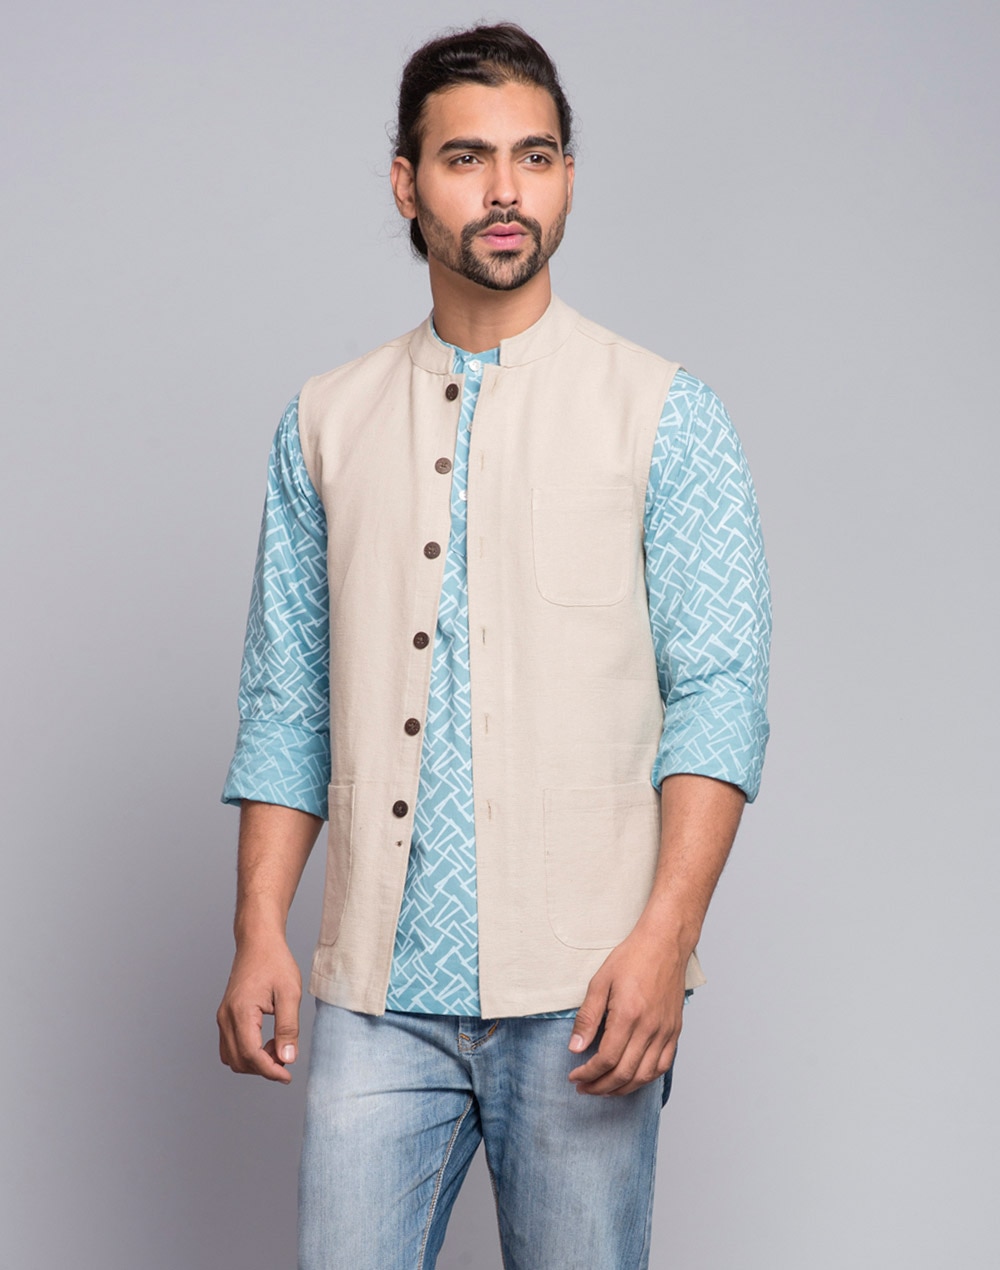 Top Ways to Style Nehru Jackets For Men